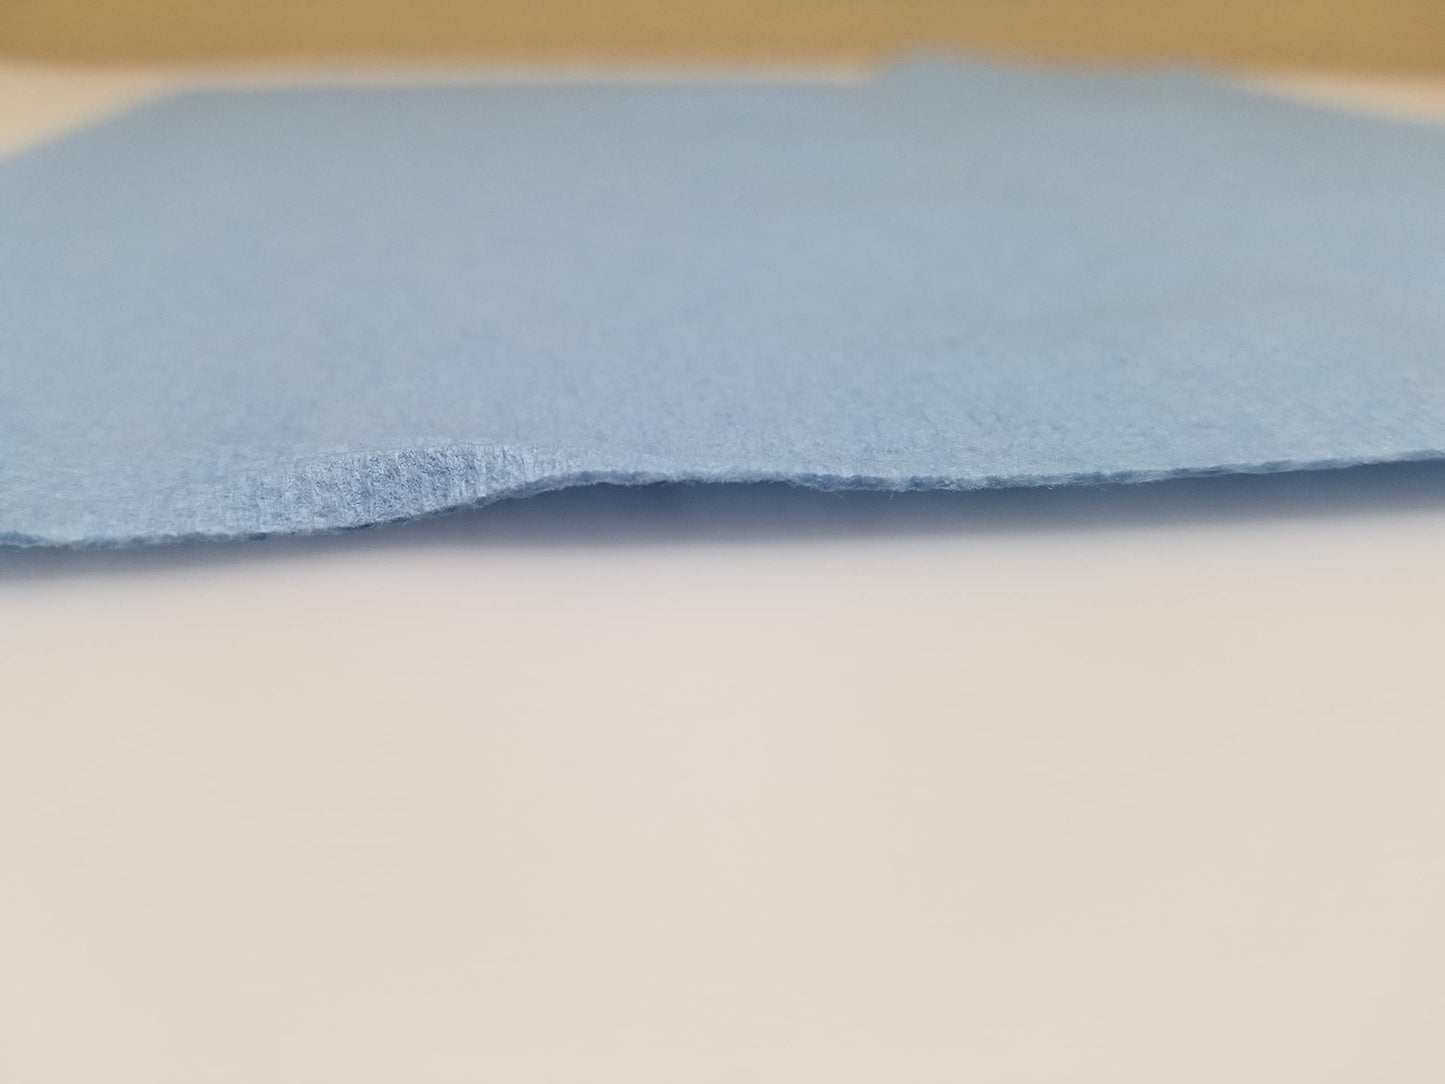 75130 Scott Single Rolls Blue Shop Towels Disposable 55 Sheets Pack 110 Total Paper Towels (2 PACK BUNDLE) Professional DIY Oil Absorbent Wipes 39.5